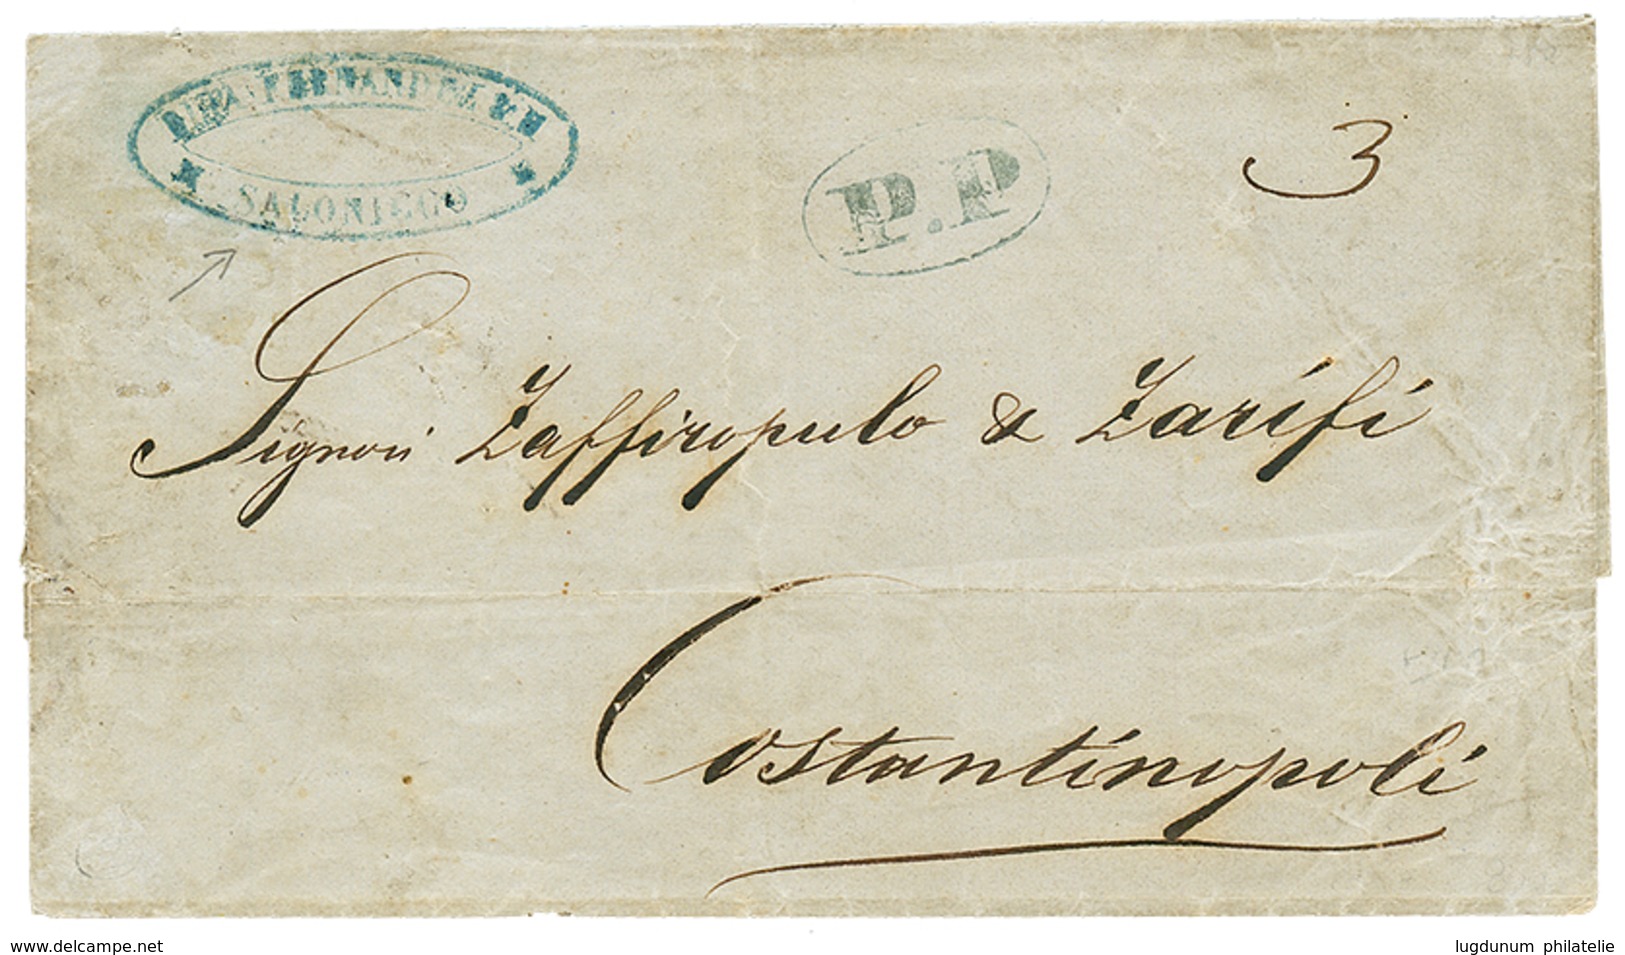 742 1852 Rare Turkish Maritime Cachet P.P + "3" Tax Marking On Cover(no Text) Datelined "SALONIQUE 8 Sept. 1852" To CONS - Levant Autrichien